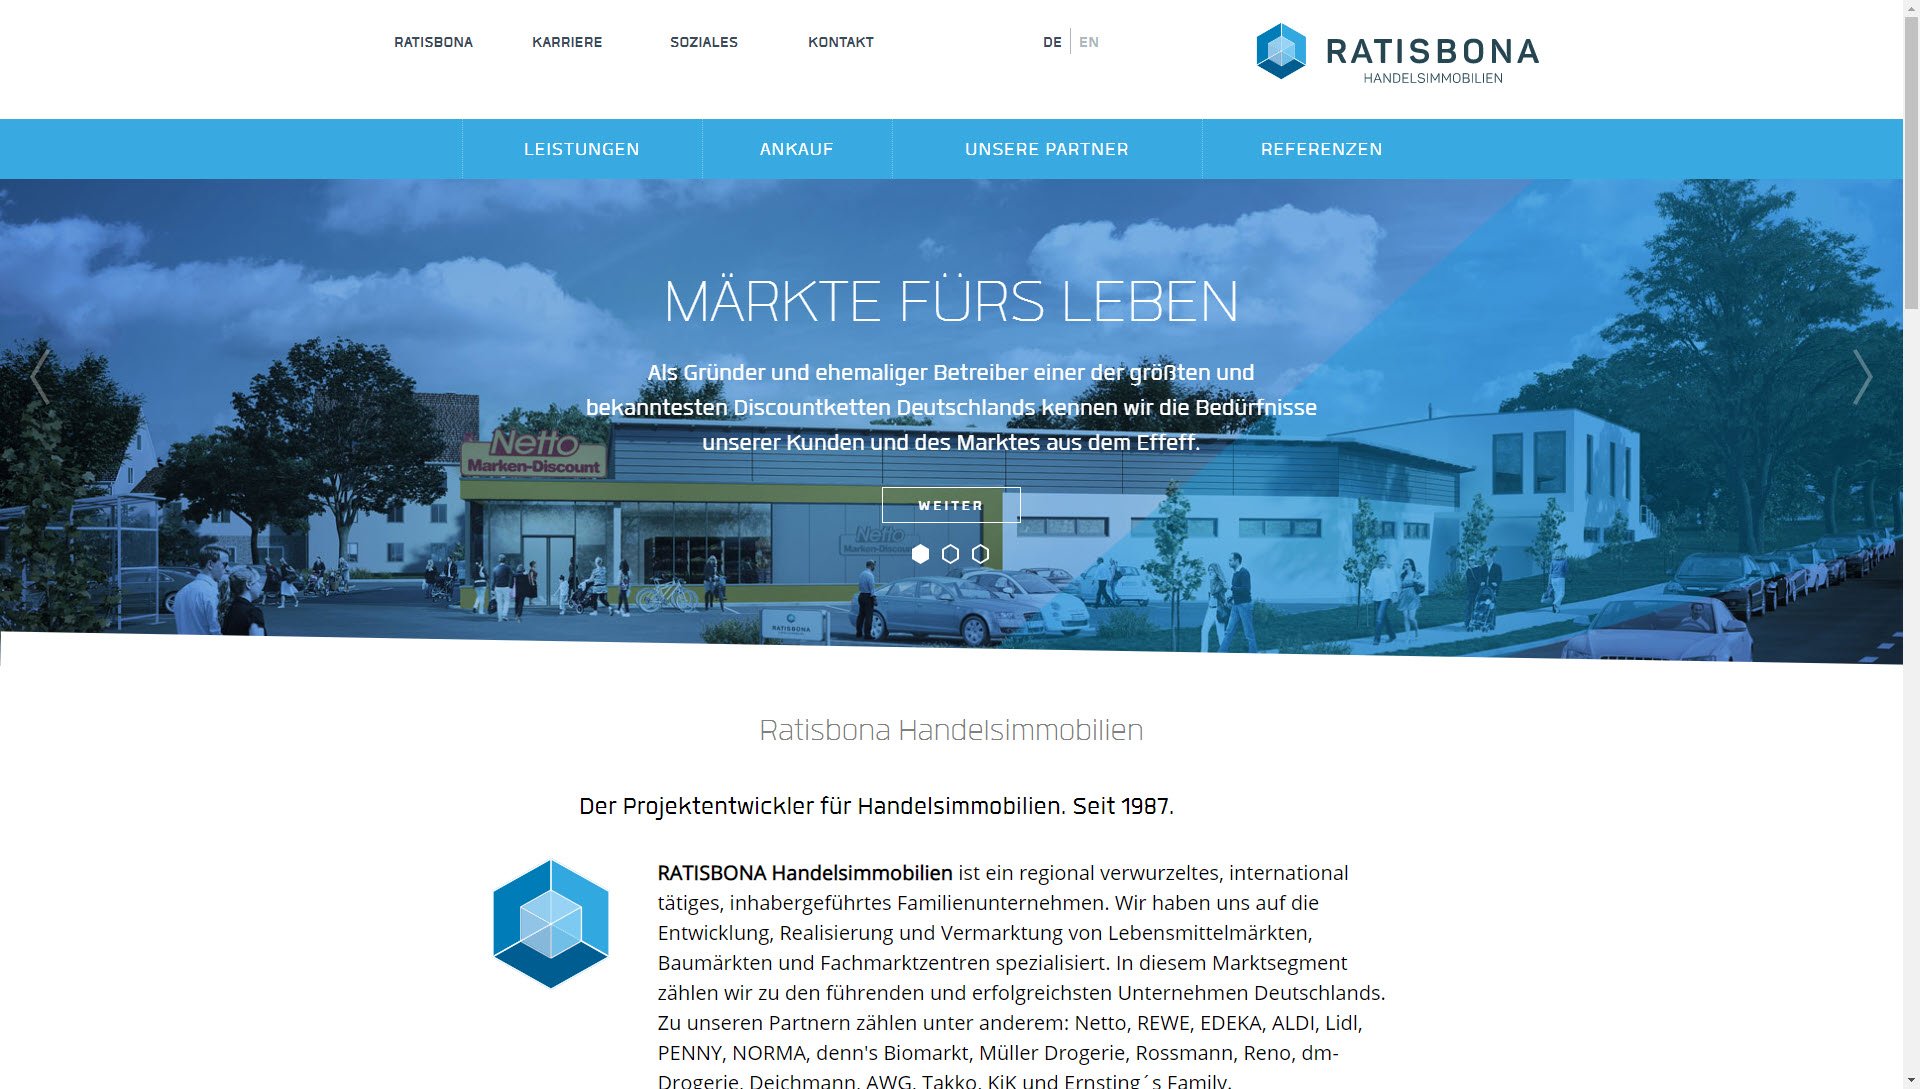 RATISBONA Holding GmbH & CO KG